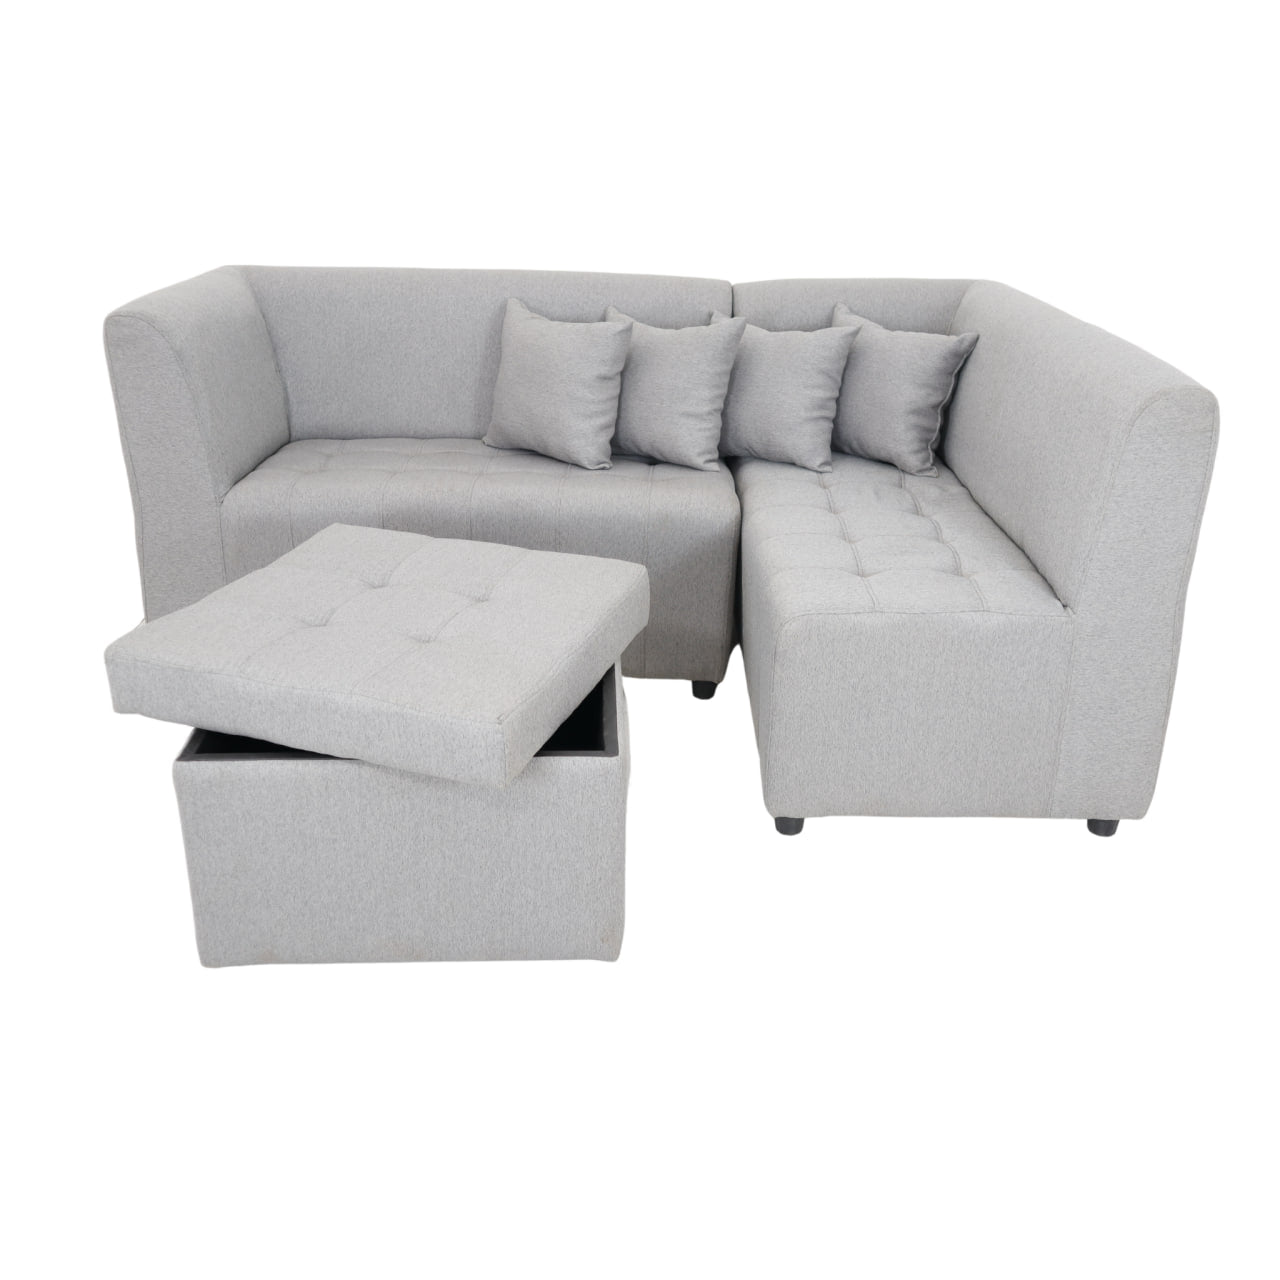 RONNA L-Shape Fabric Sofa w/ Storage Ottoman AF Home